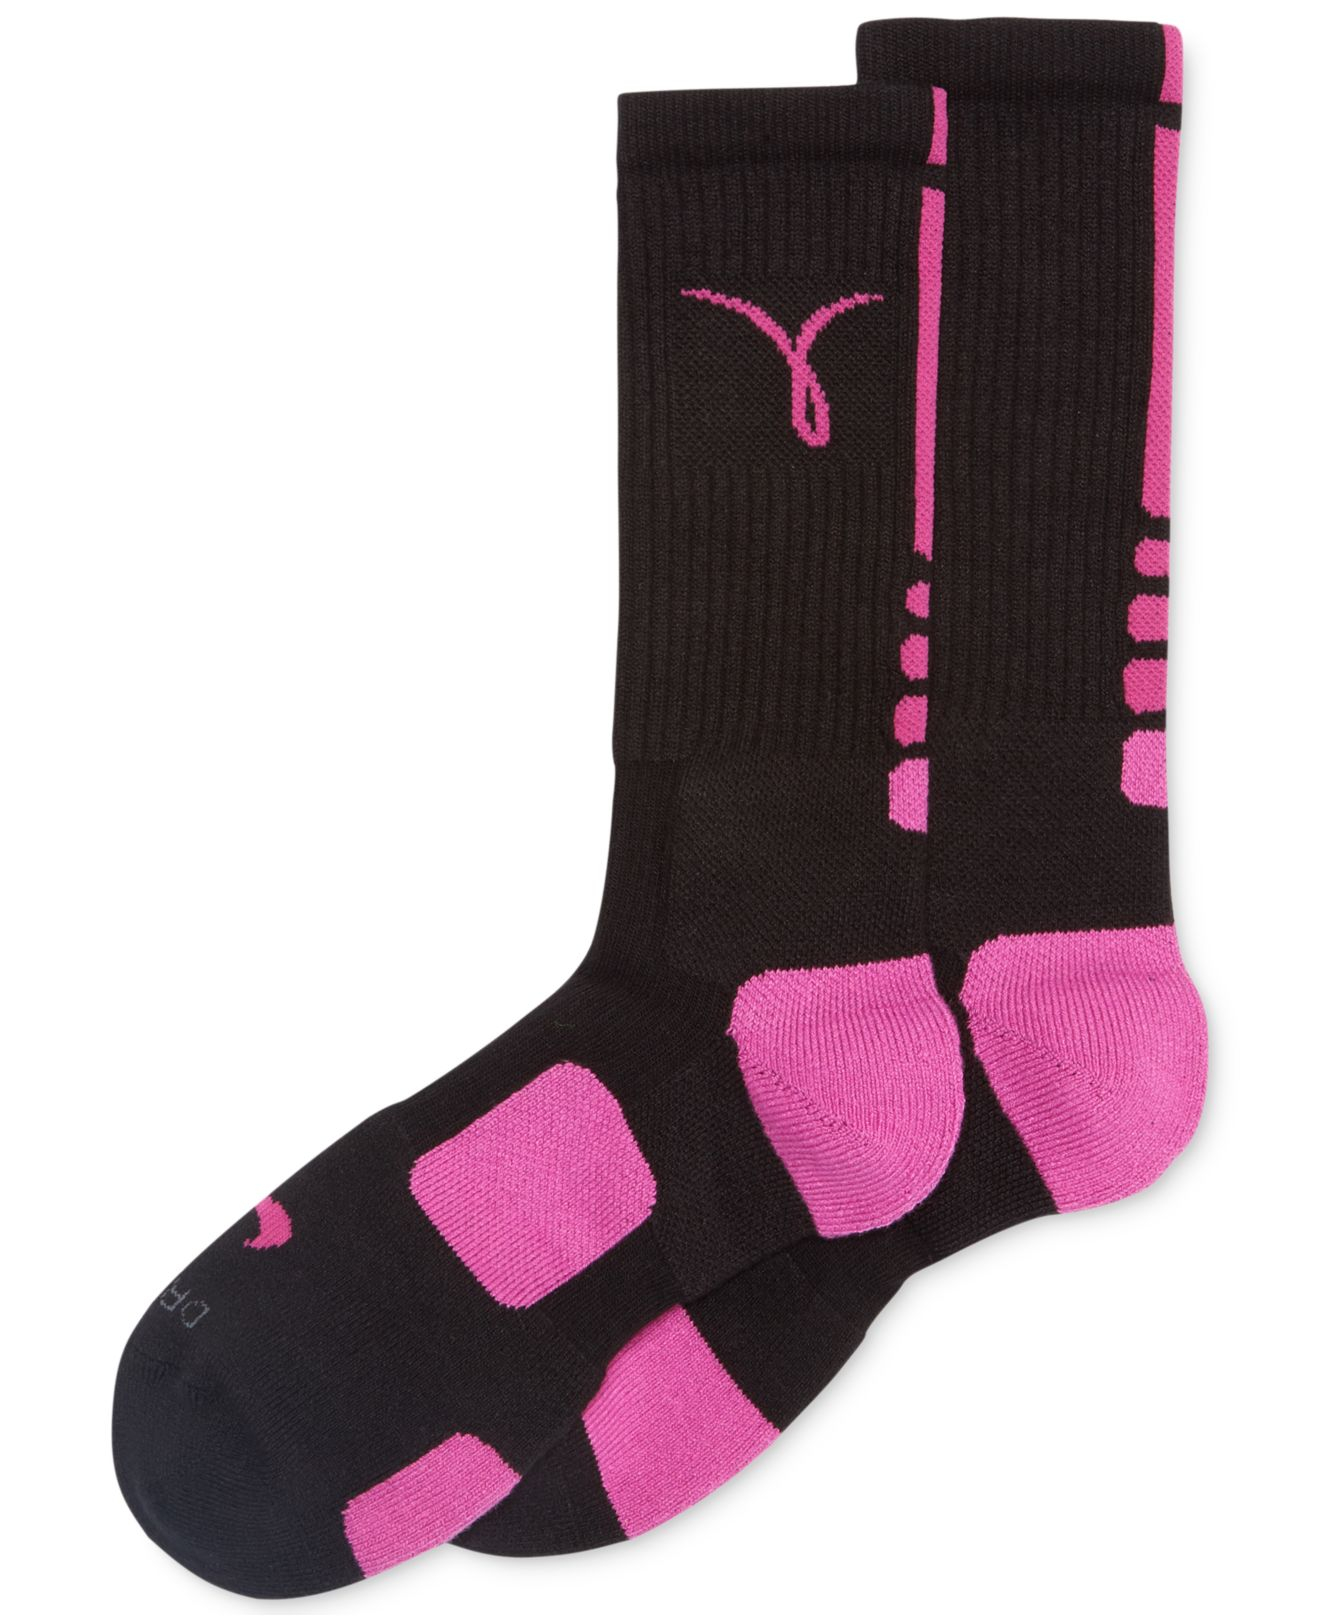 nike elite cancer socks